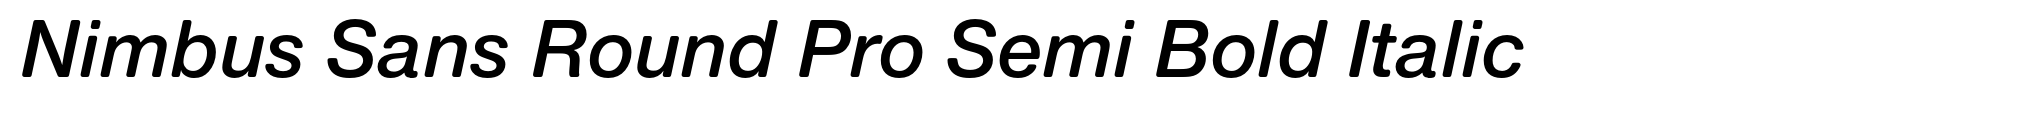 Nimbus Sans Round Pro Semi Bold Italic image